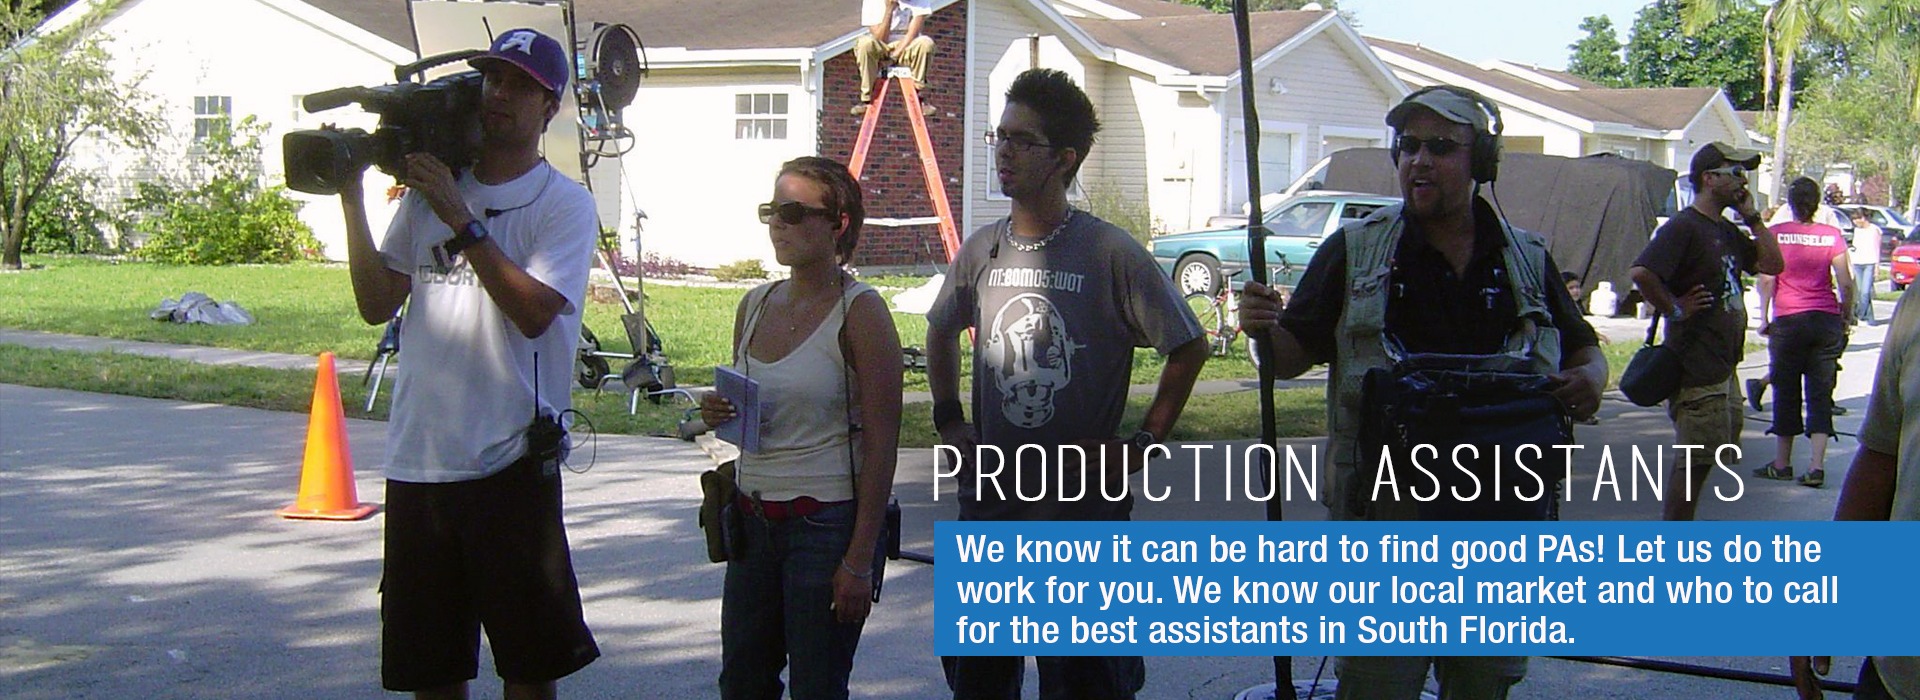 MPCrew-Banner-Production-Assistants